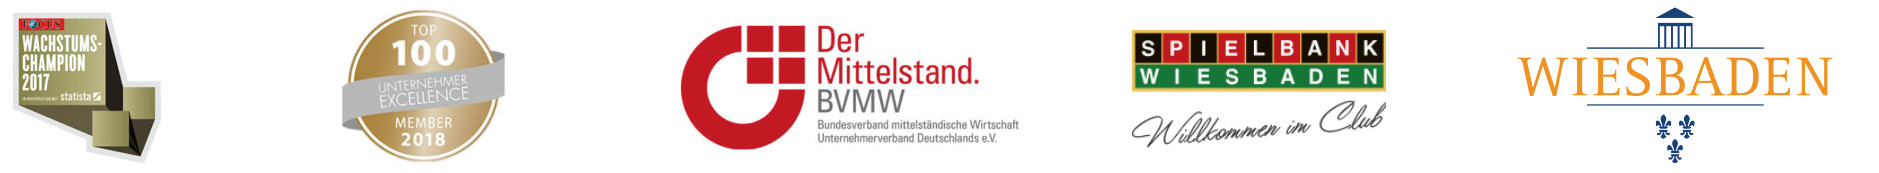 Elektriker Wiesbaden Banner